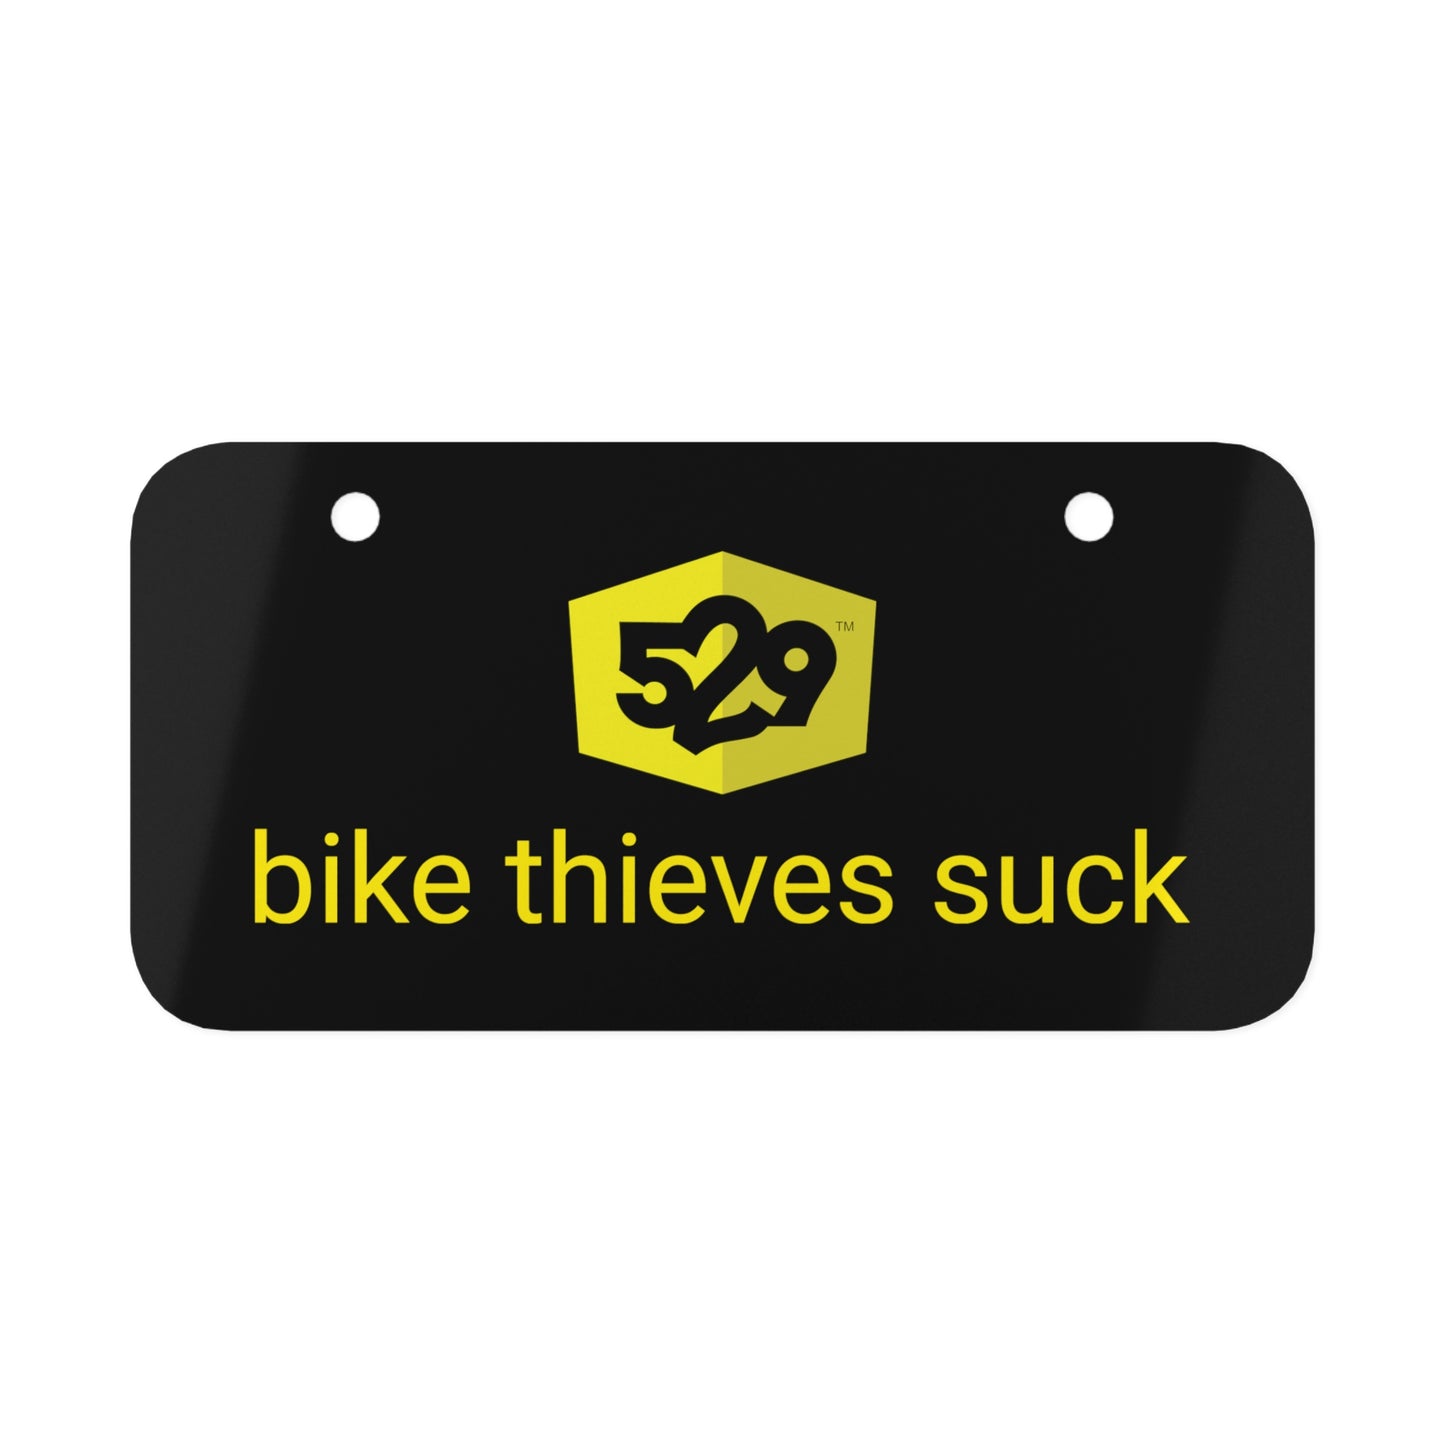 Bike thieves suck mini license plate